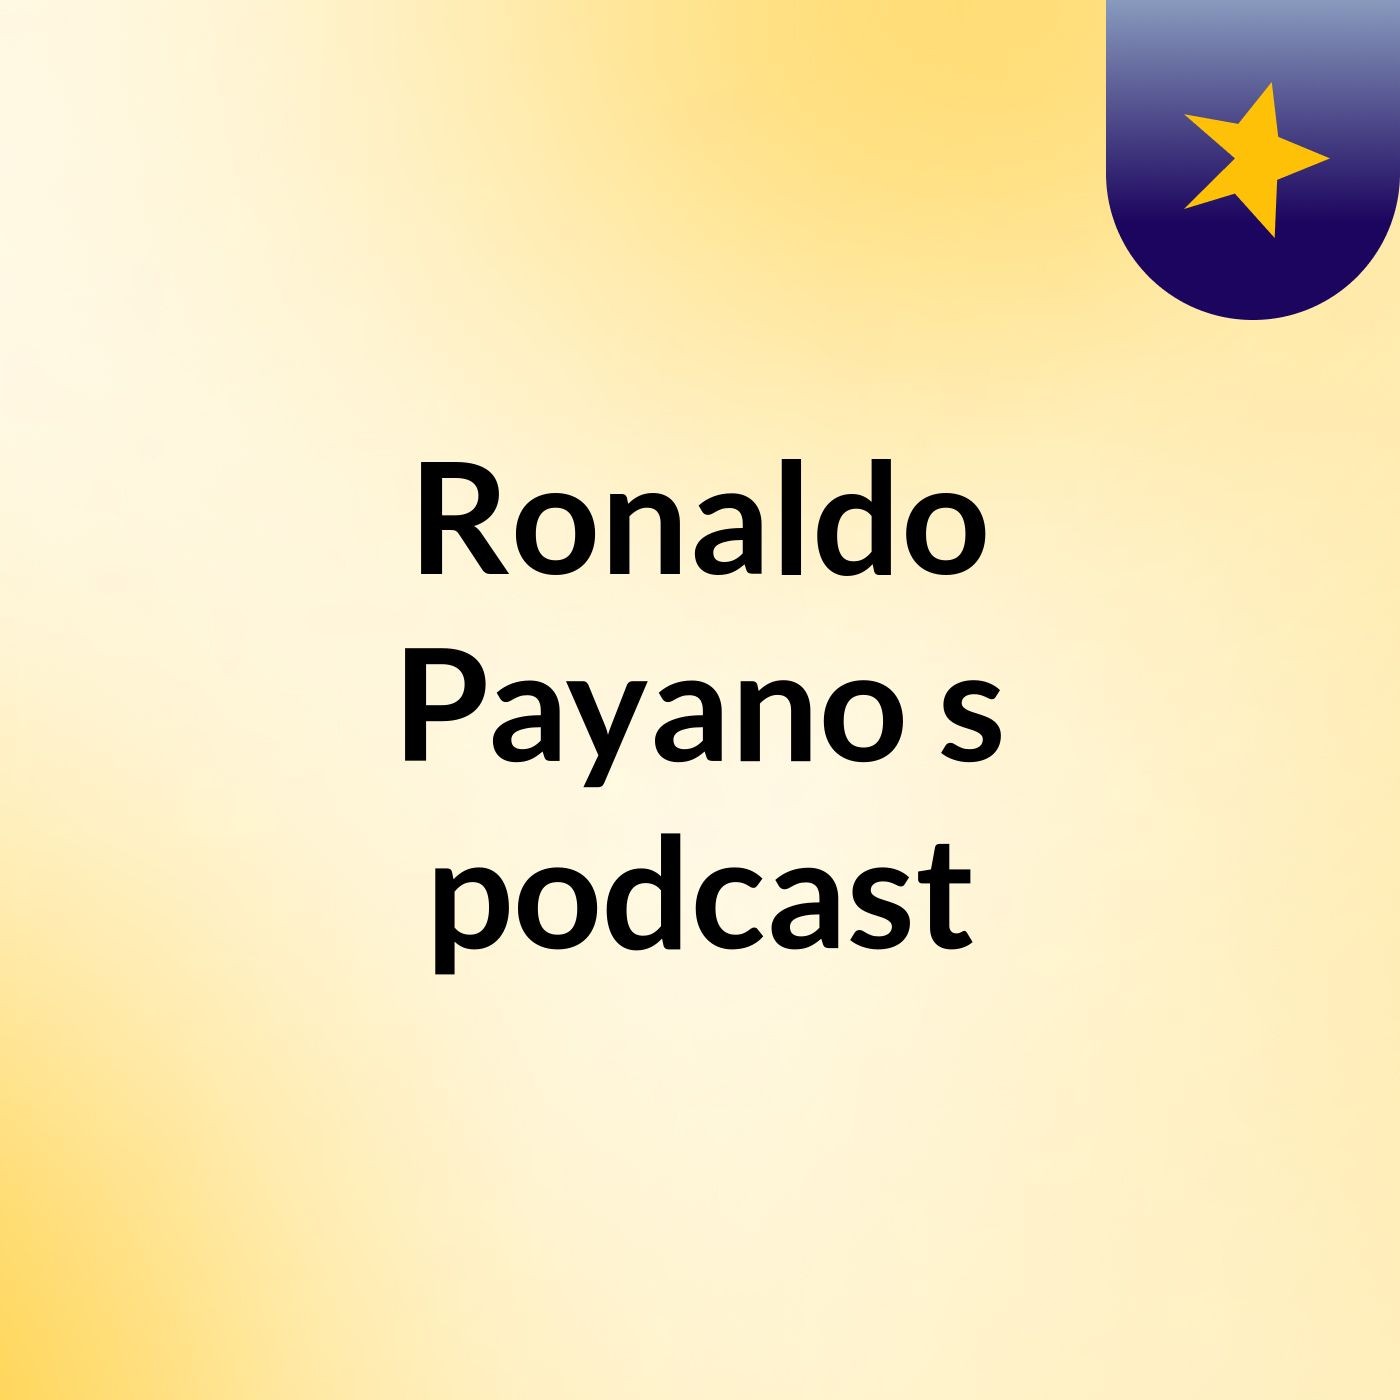 Ronaldo Payano's podcast